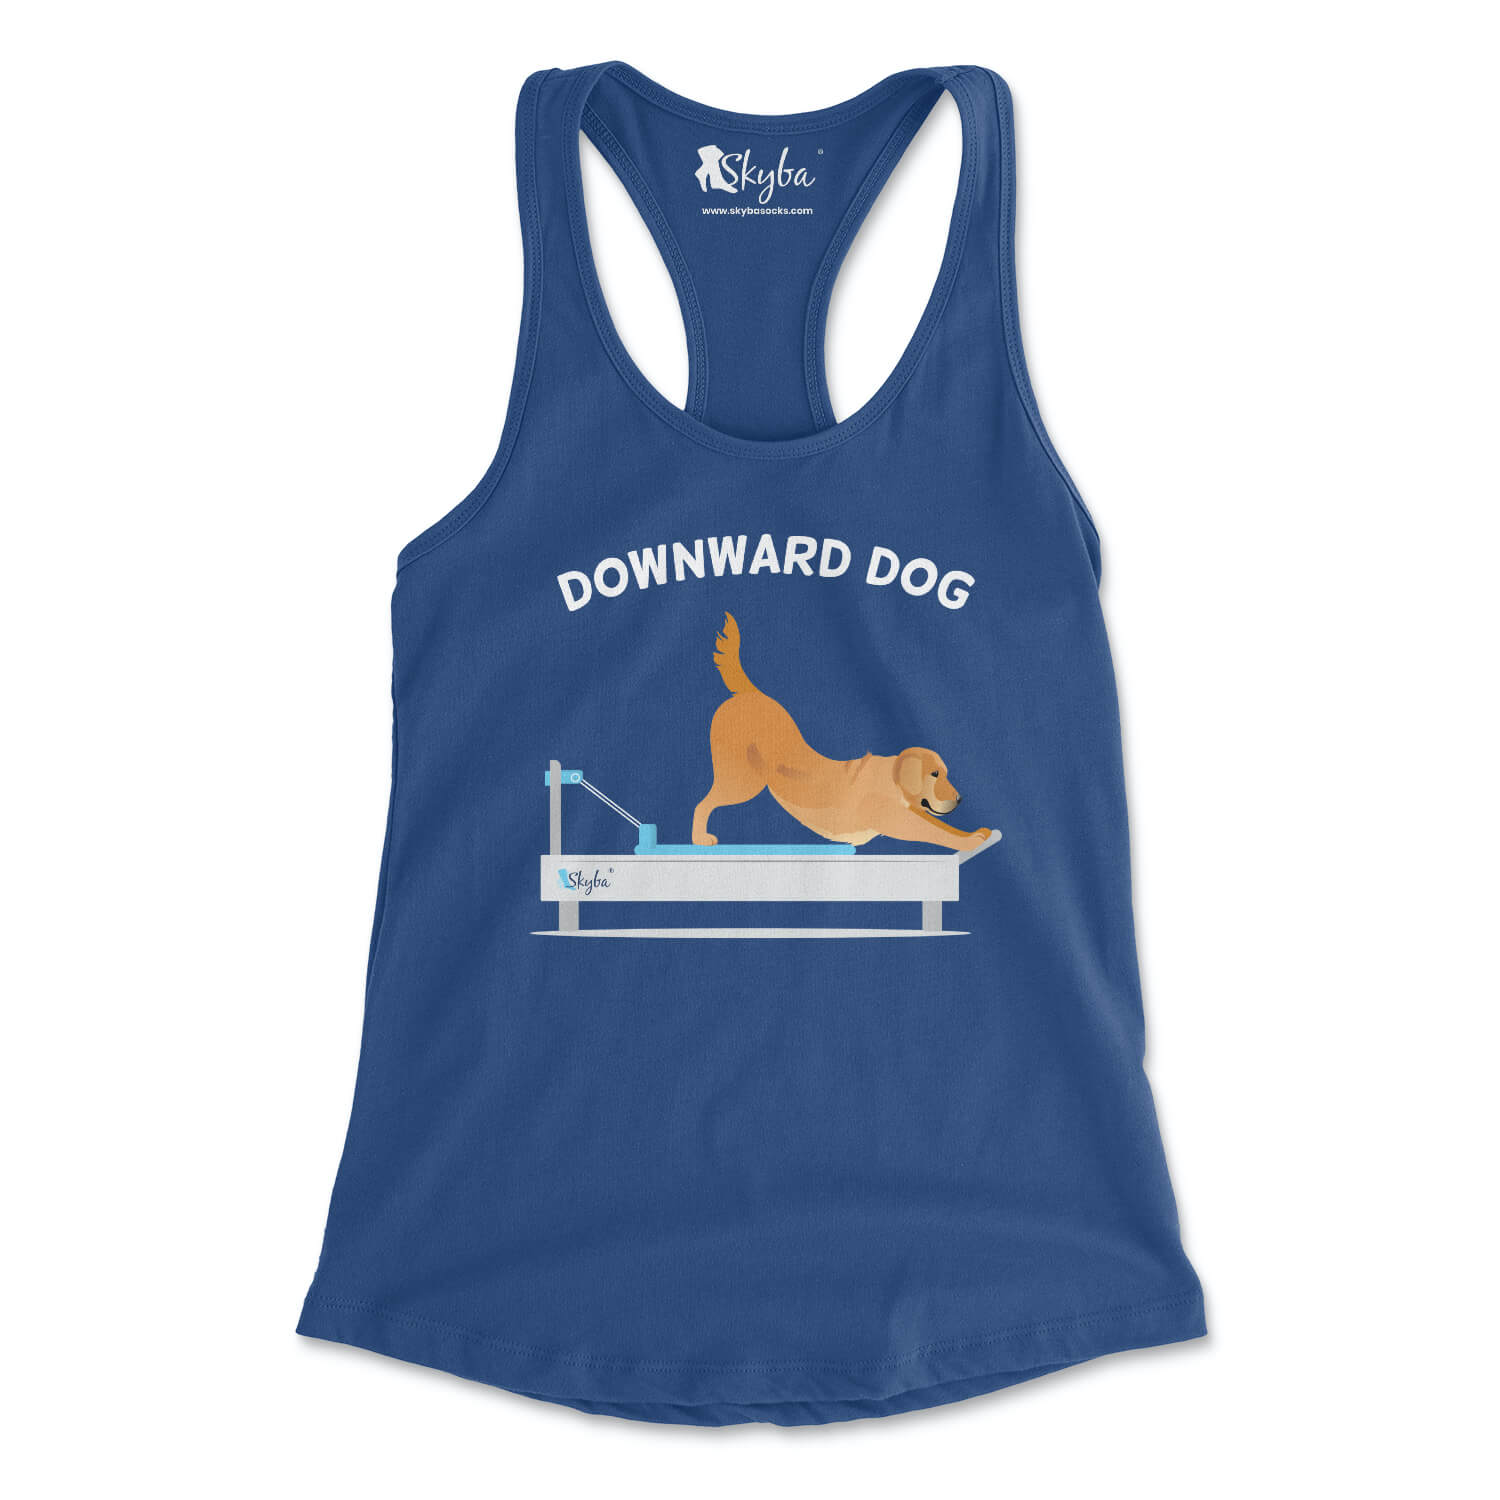 "Downward Dog" Golden Retriever on Reformer - Women's Slim Fit Tank Skyba Tank Top